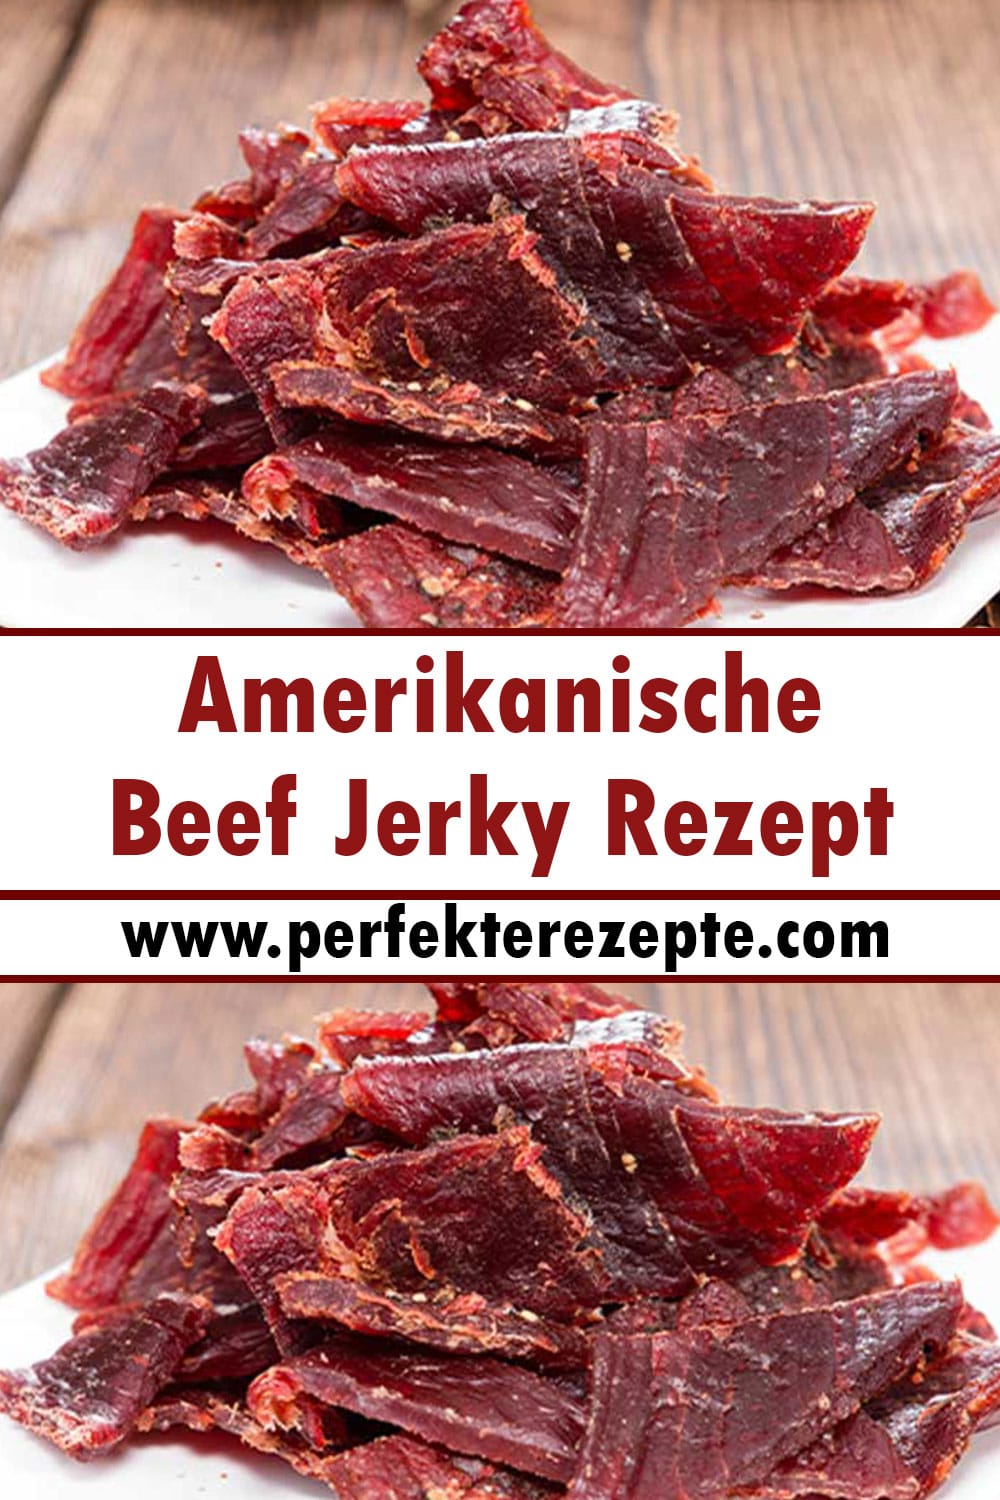 Amerikanische Beef Jerky Selbstgemacht Rezept